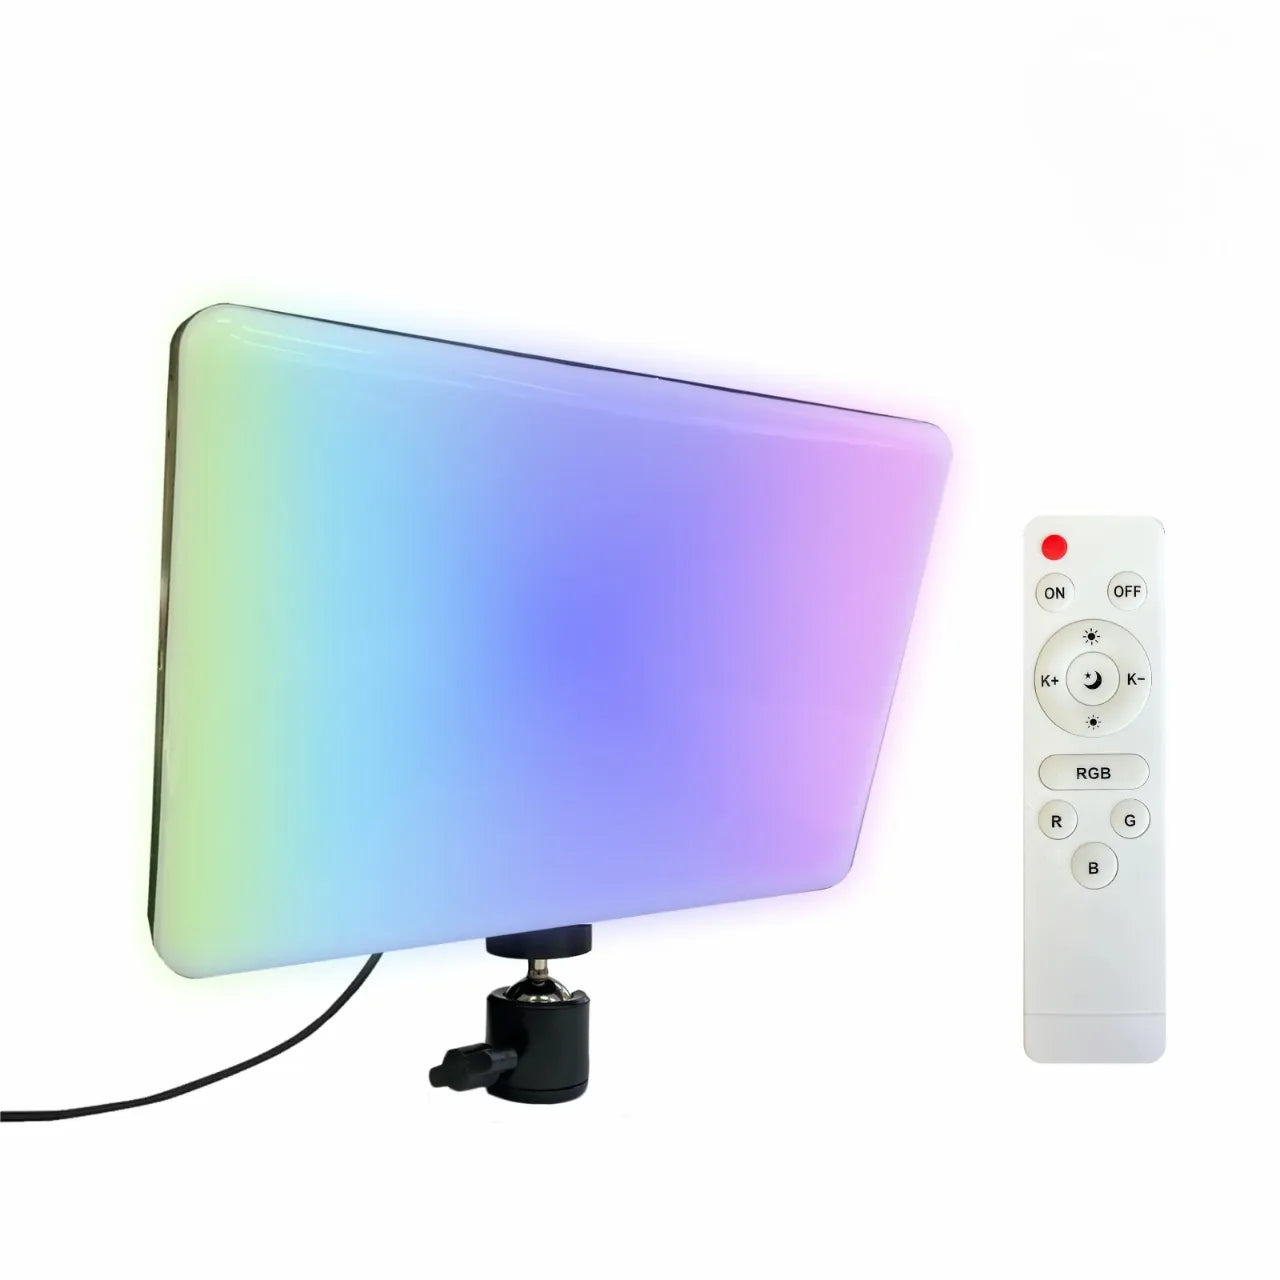 RGB LED Video Light Photography Fill Camera Light